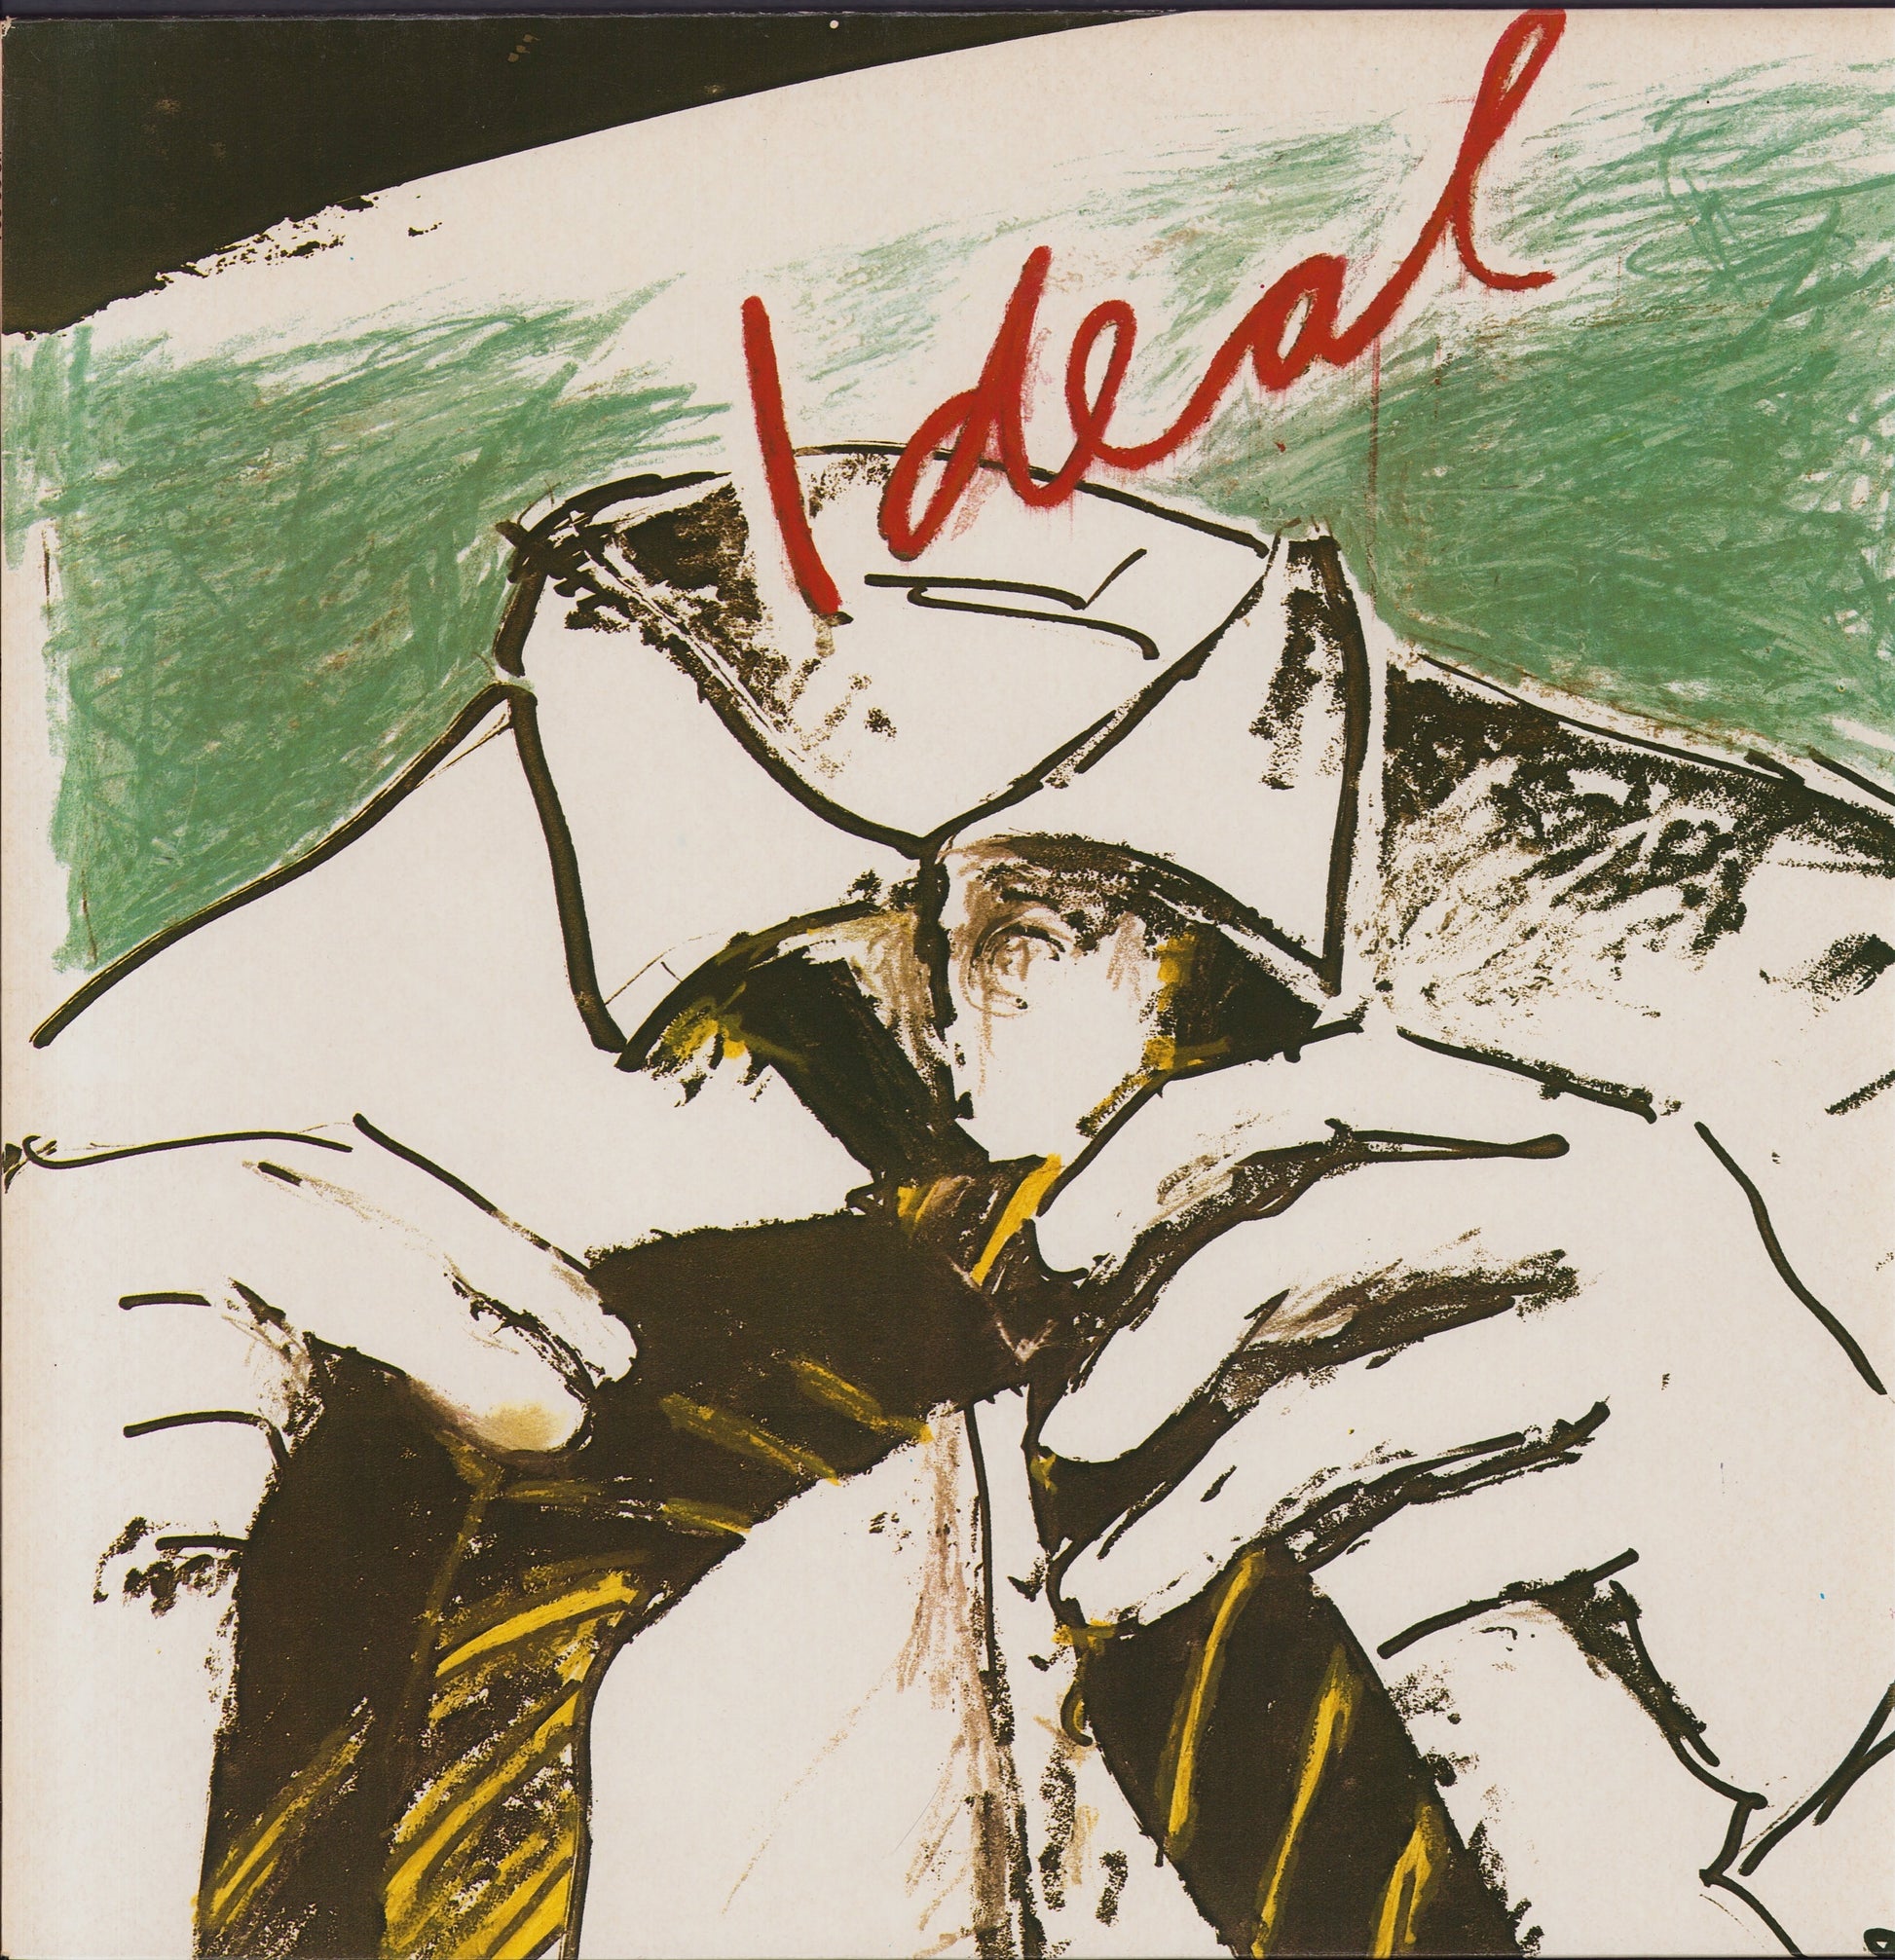 Ideal - Ideal (Vinyl LP)